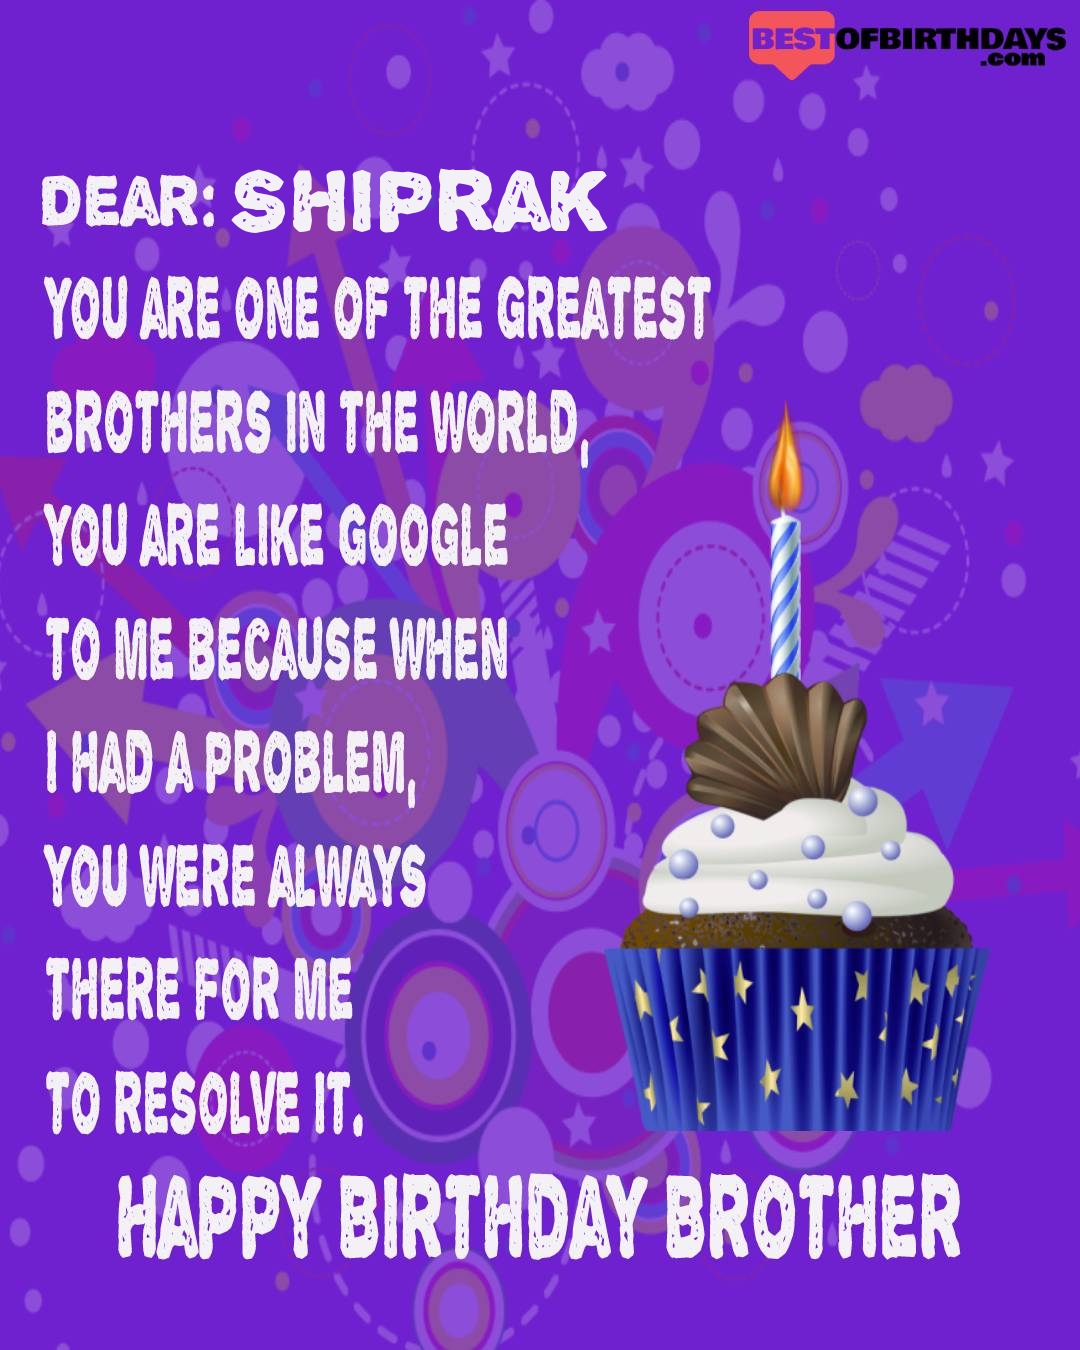 Happy birthday shiprak bhai brother bro